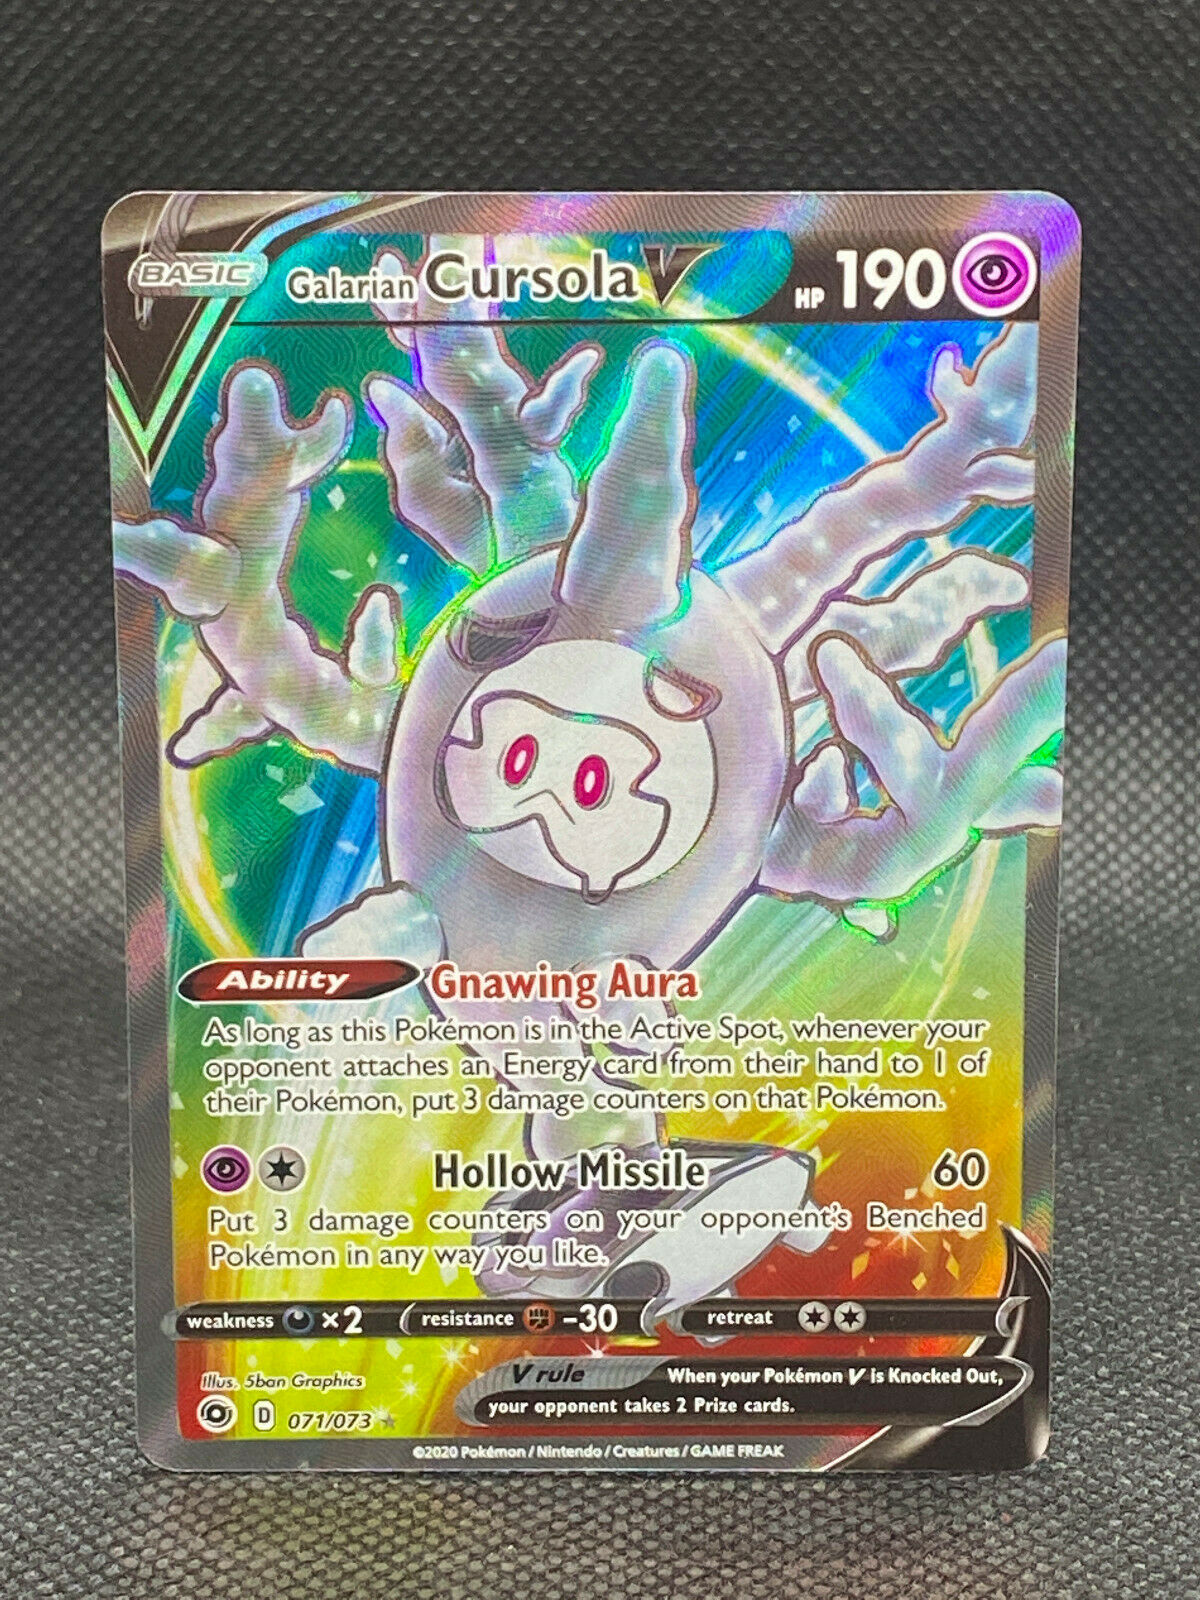 2020 Pokémon Champion's Path Galarian Cursola V Full Art Ultra Rare NM 071/073